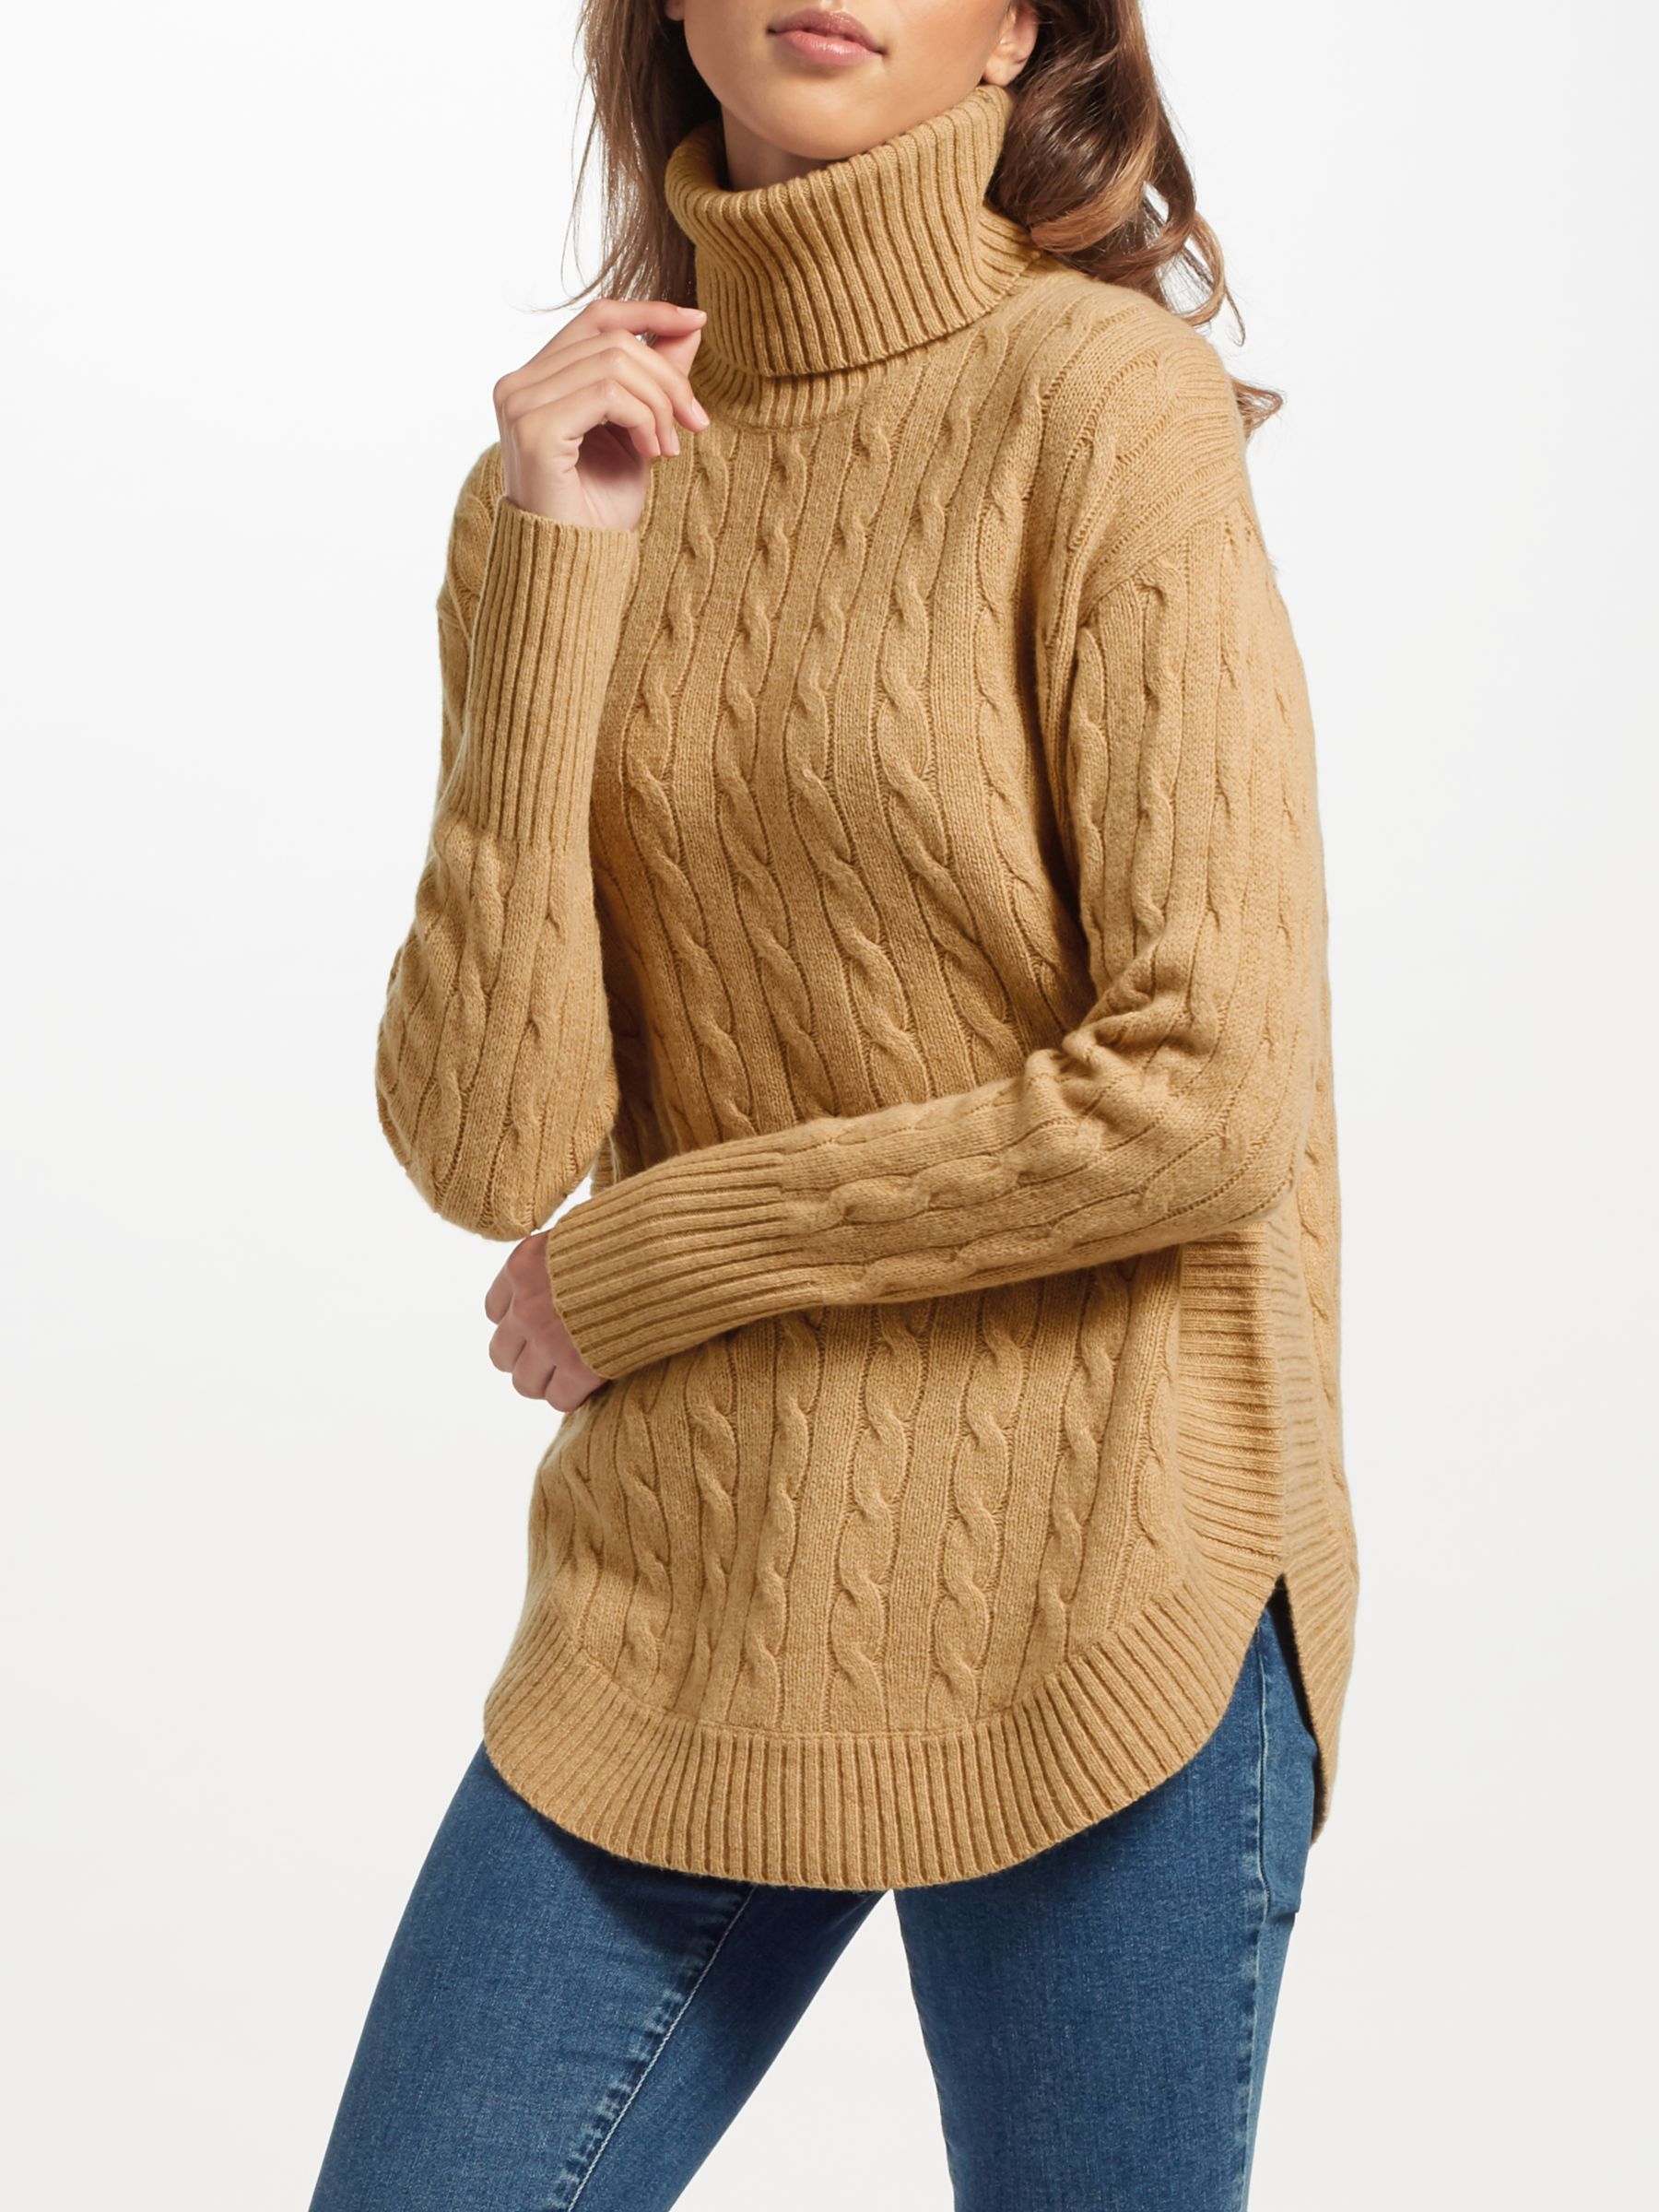 ralph lauren camel sweater